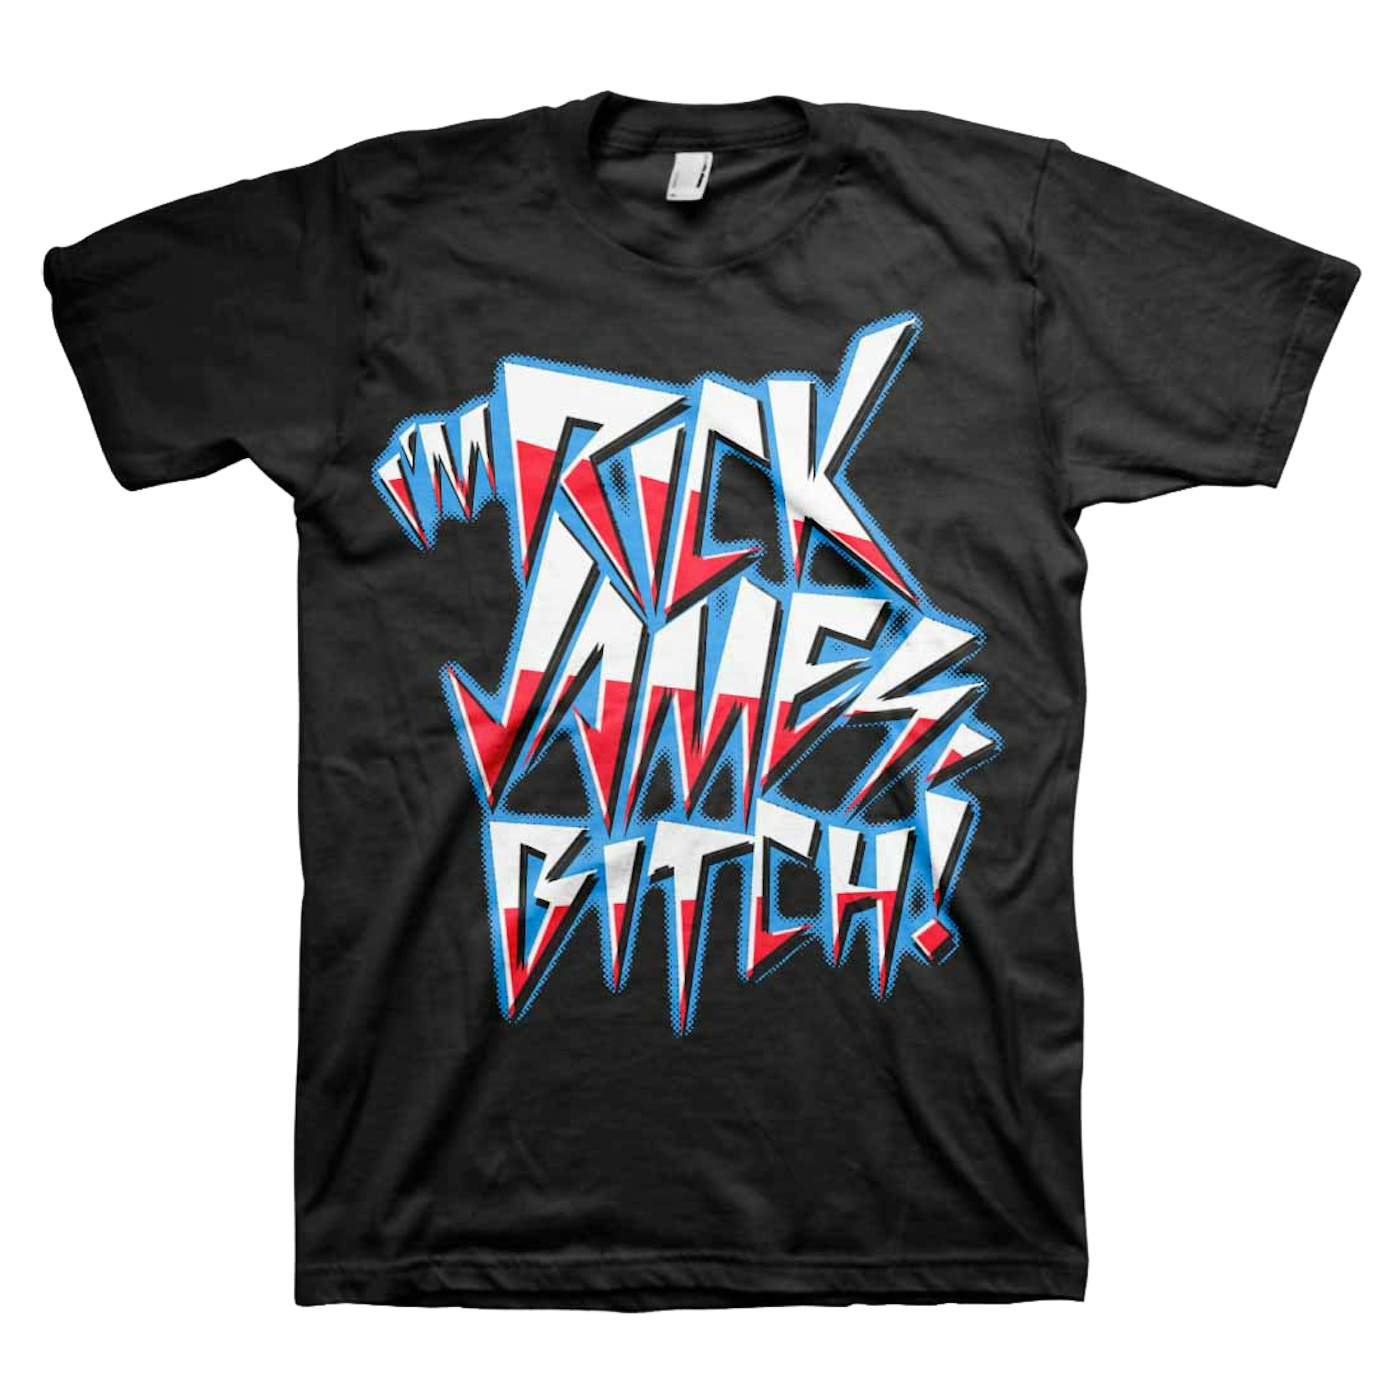 I'm Rick James Bitch! T-Shirt